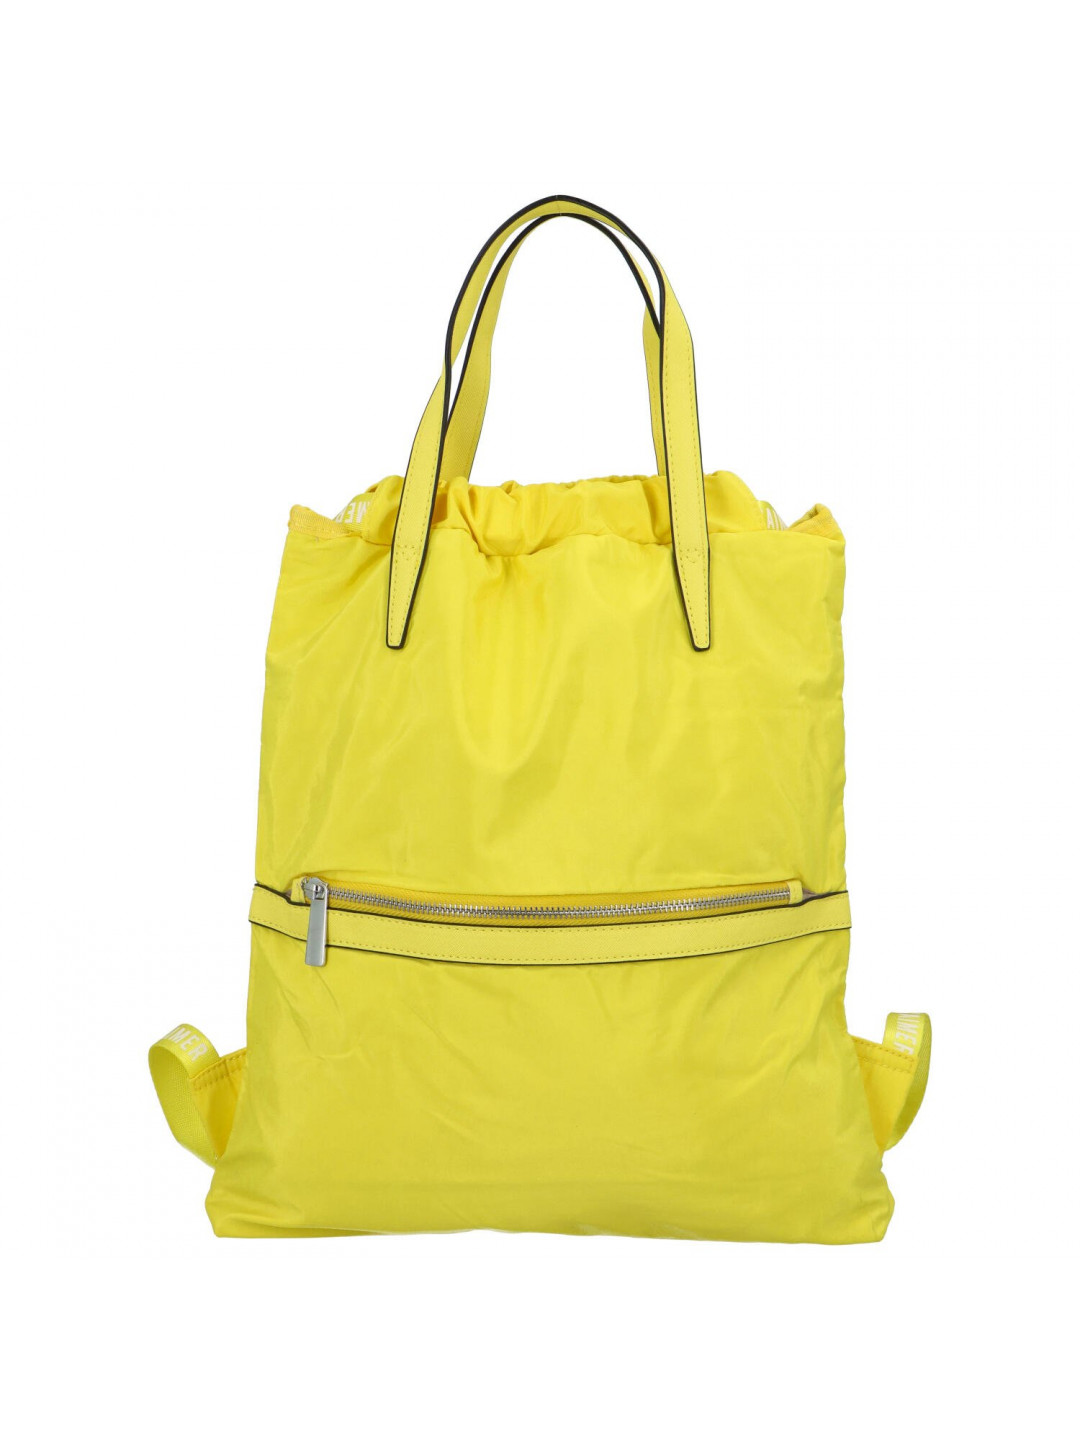 Dámský batoh žlutý – Paolo bags Taigo